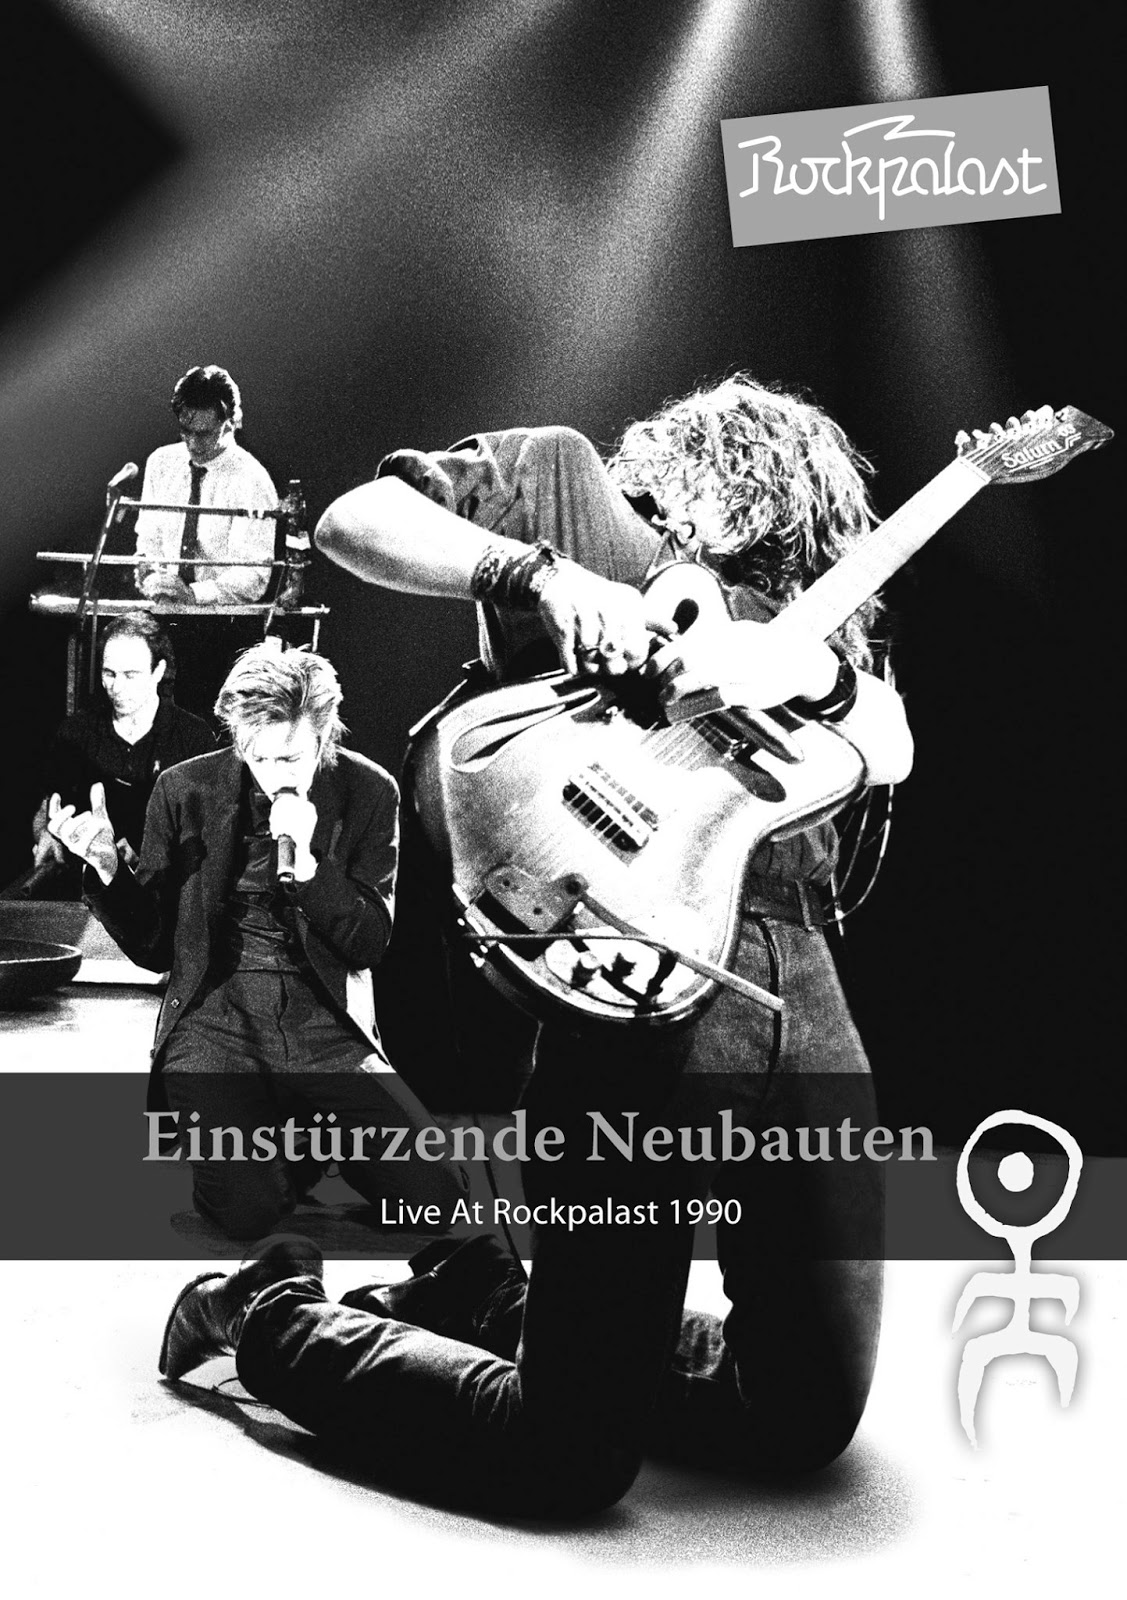 FFanzeen: Rock'n'Roll Attitude With Integrity: DVD Review: Einstürzende